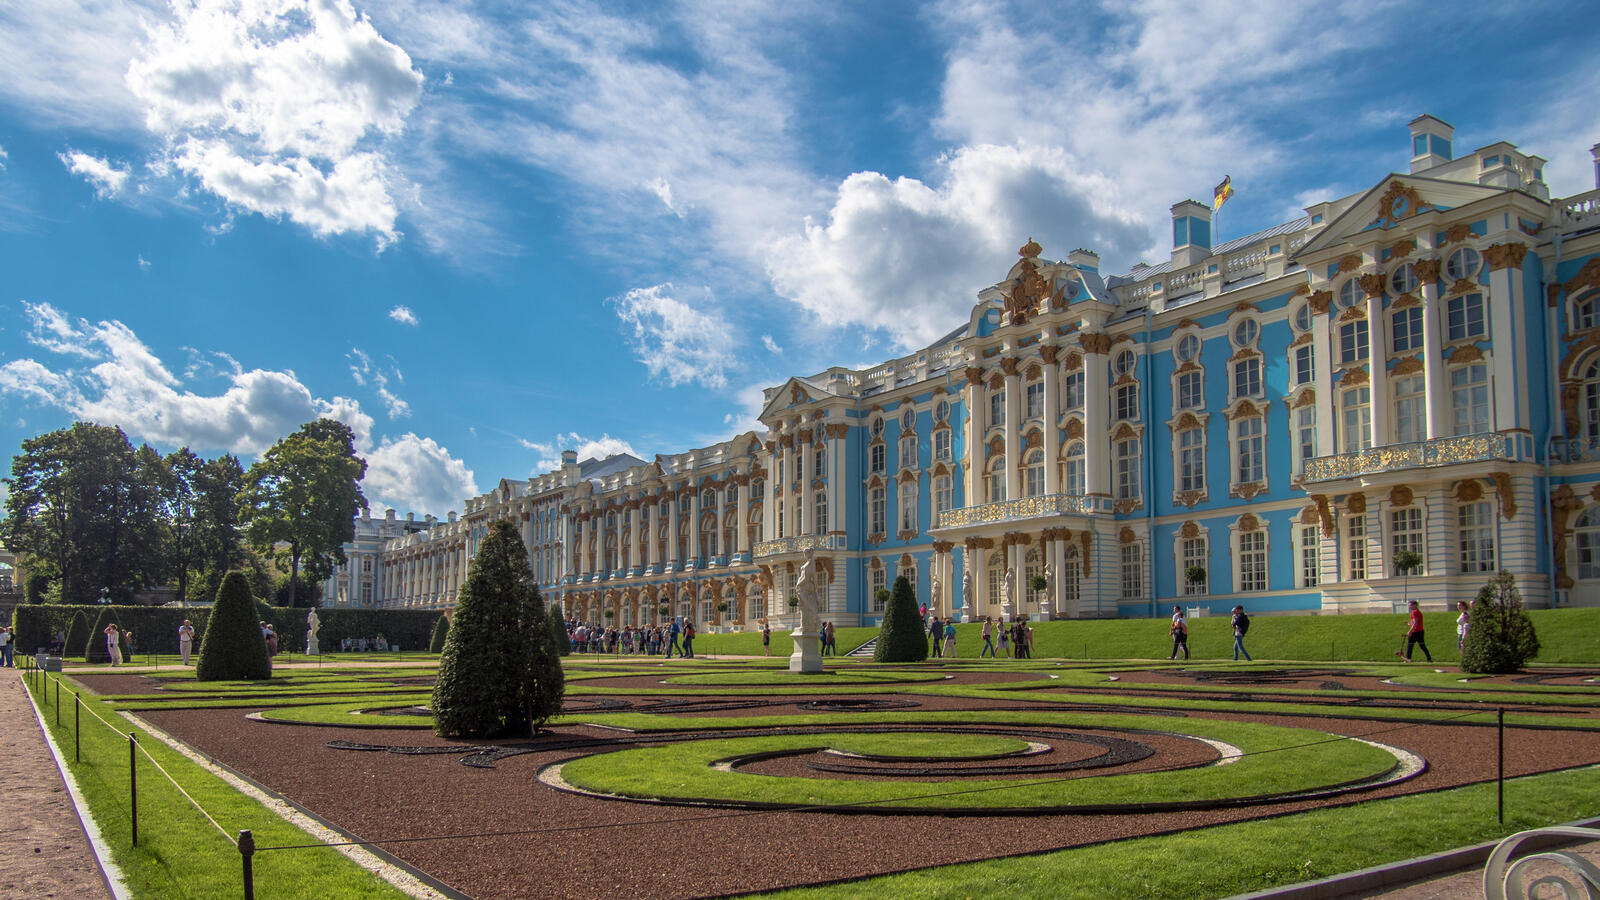 Обои The Catherine palace Tsarskoye Selo St Petersburg на рабочий стол